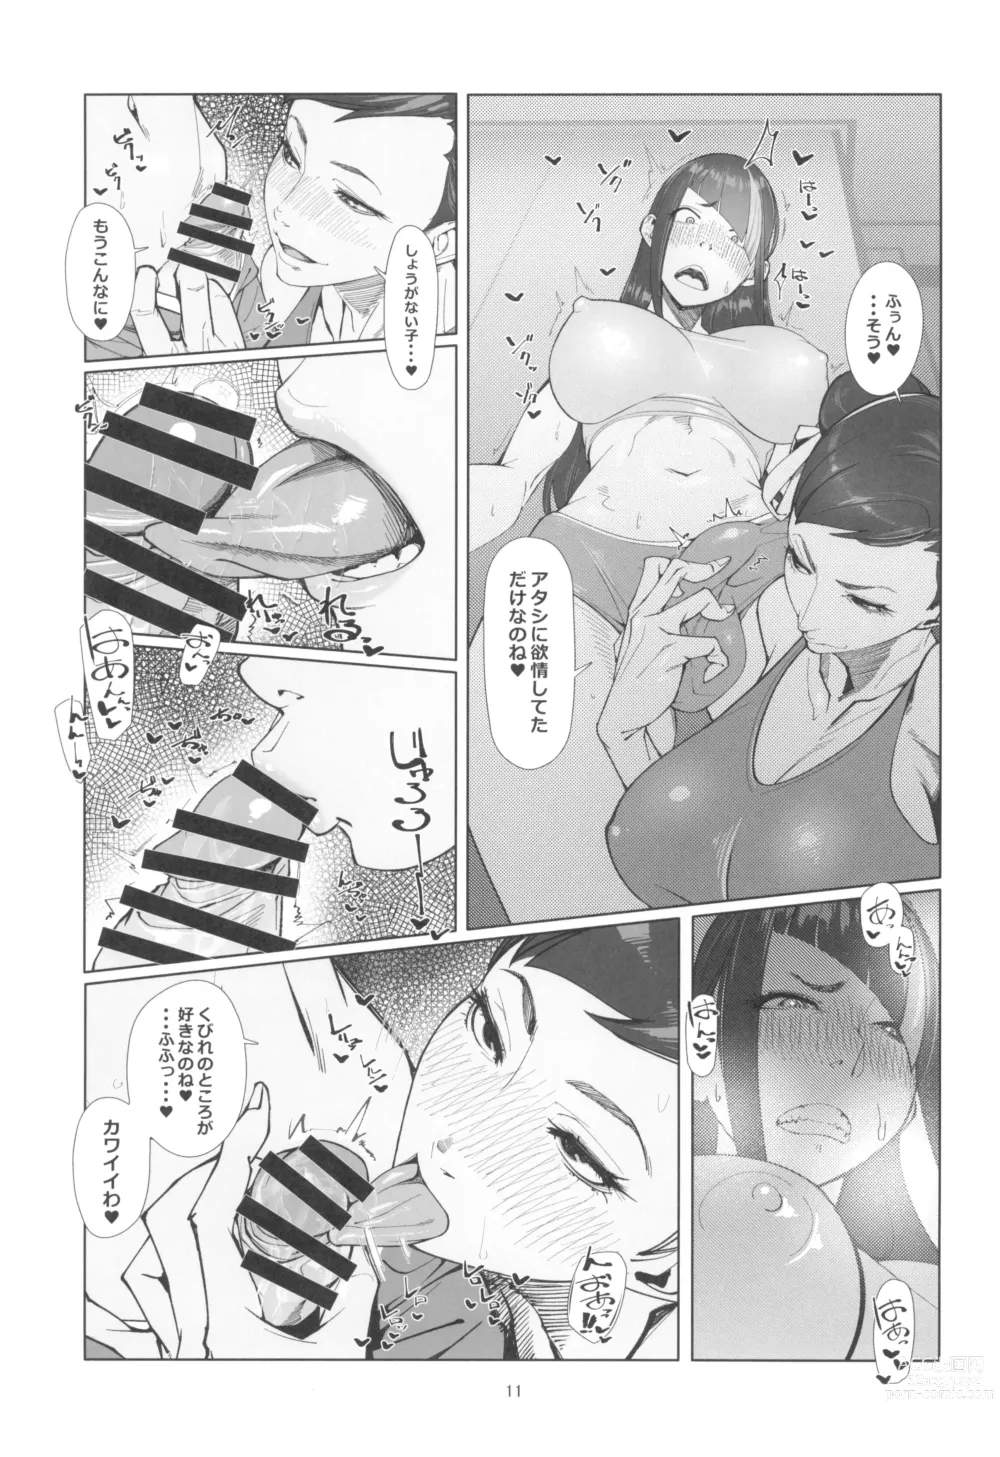 Page 11 of doujinshi Backstab